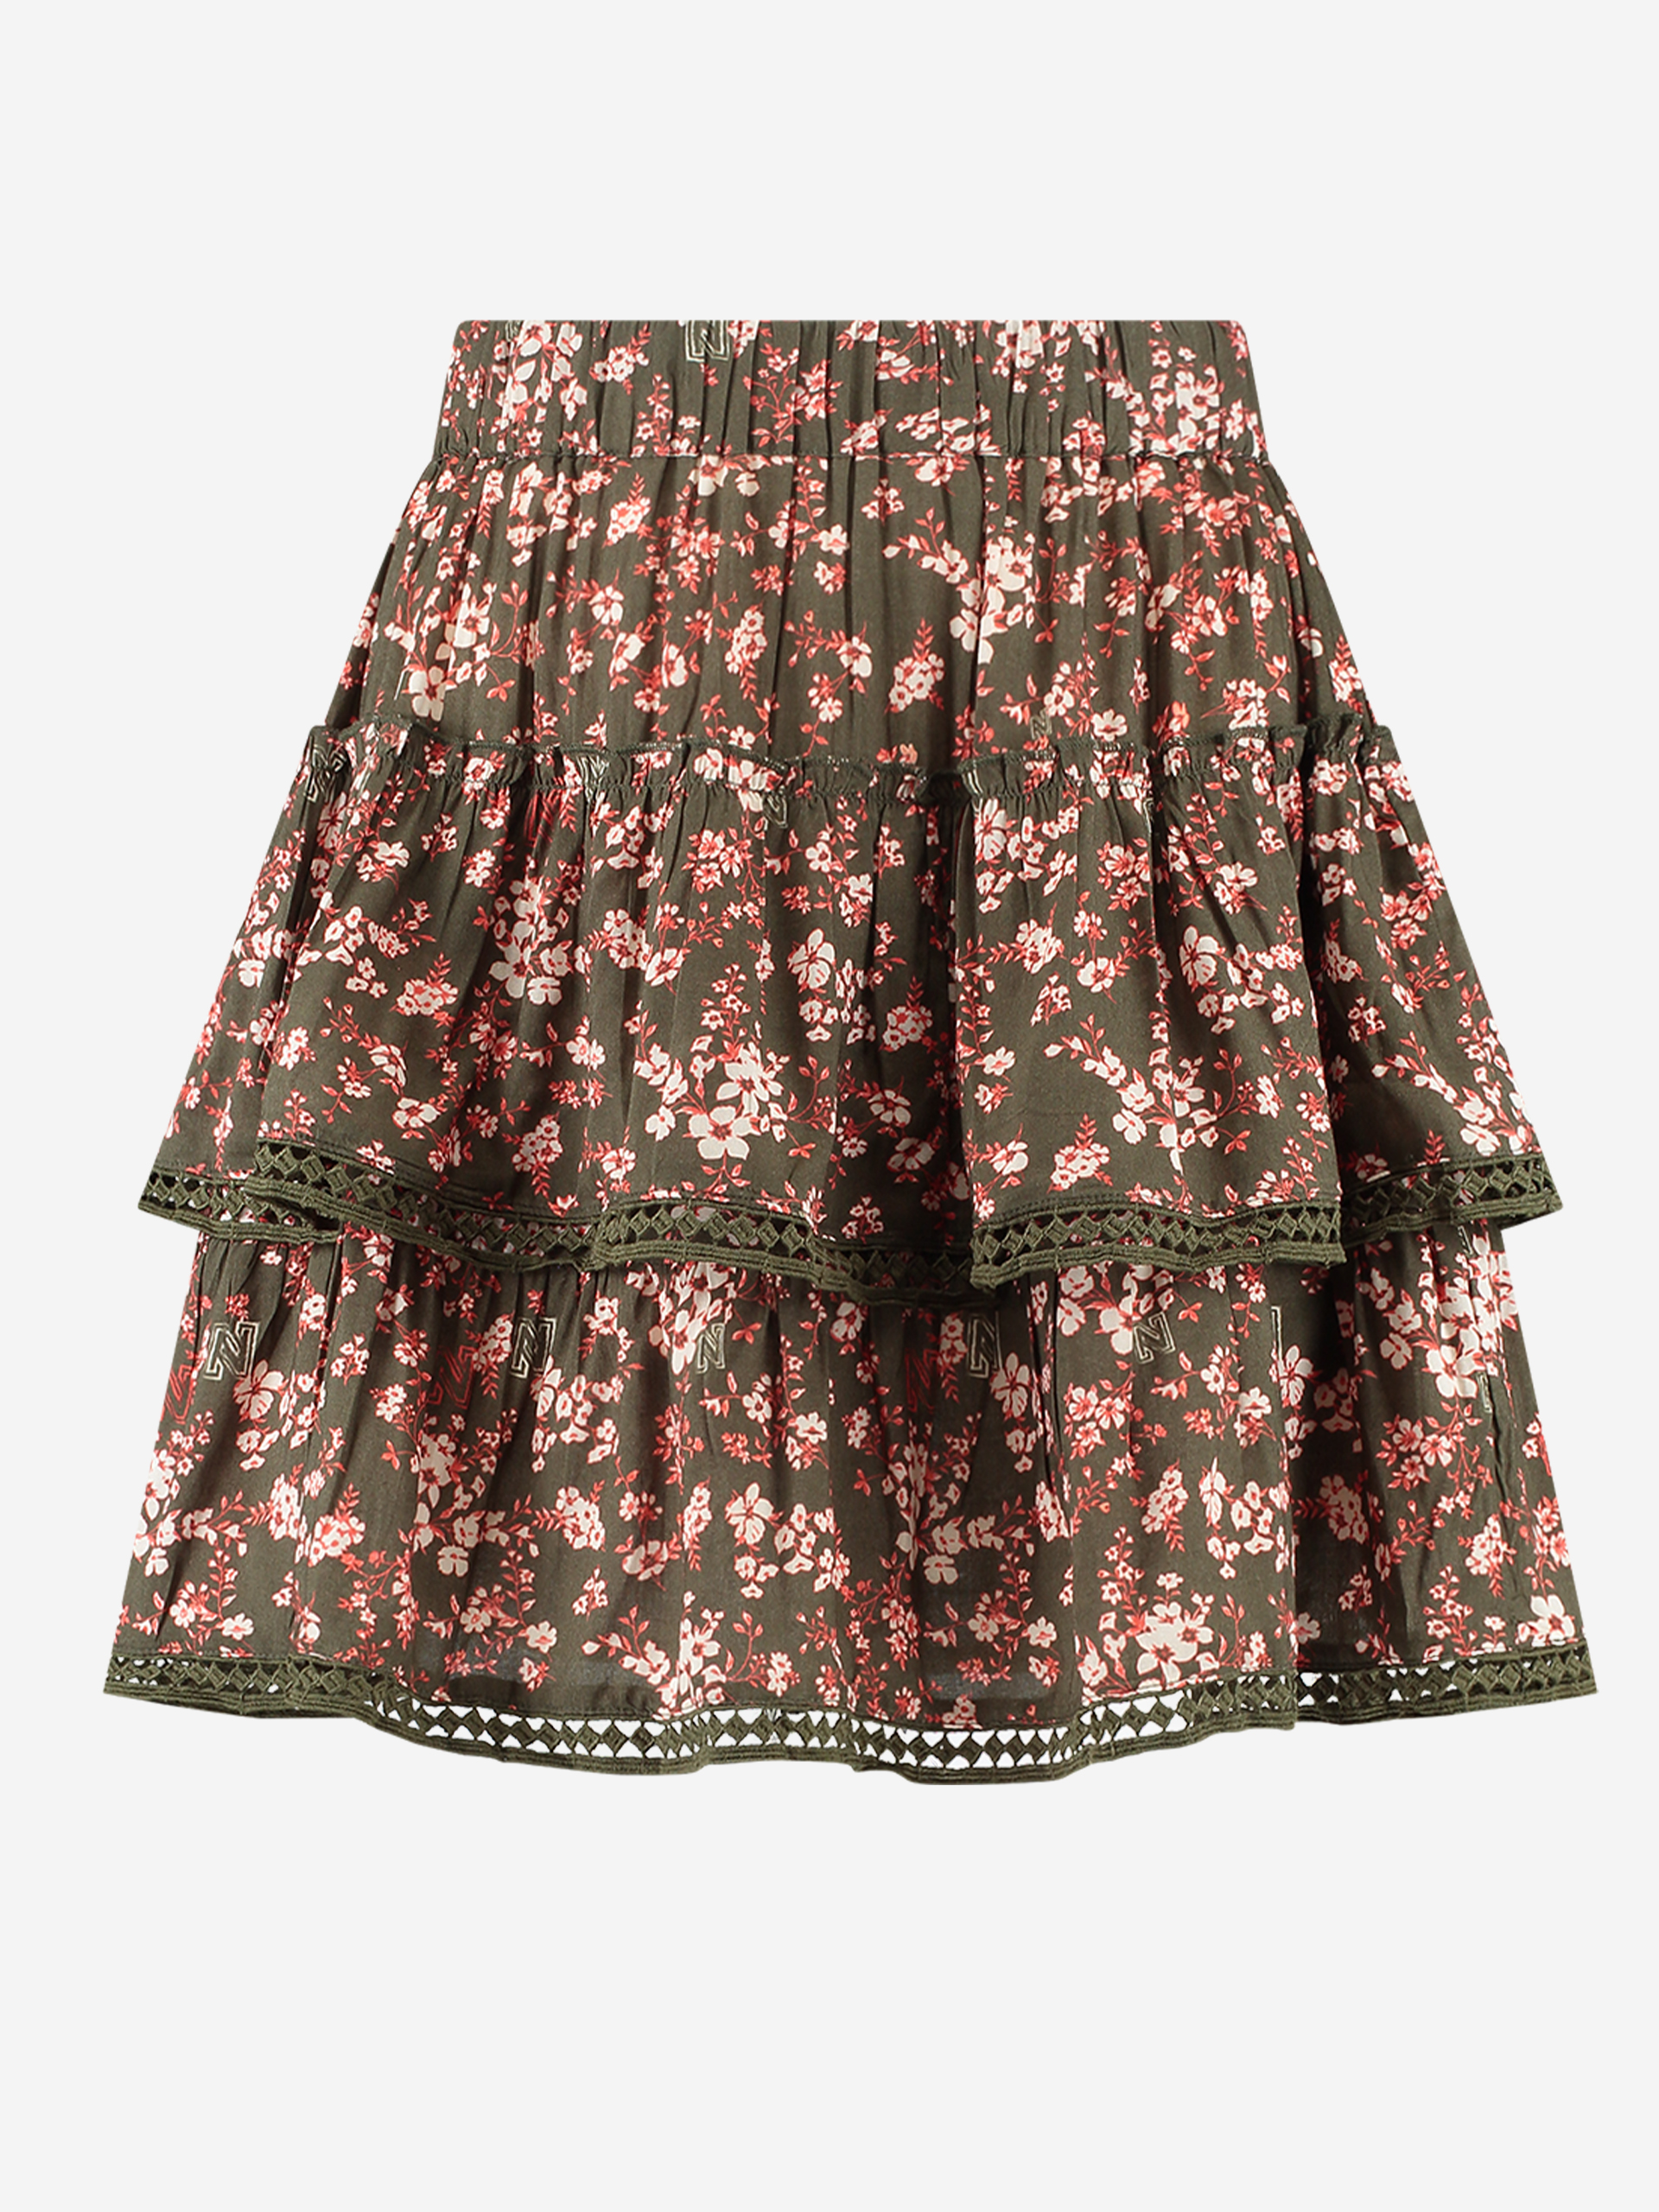 skirt with ruffles and flowerprint